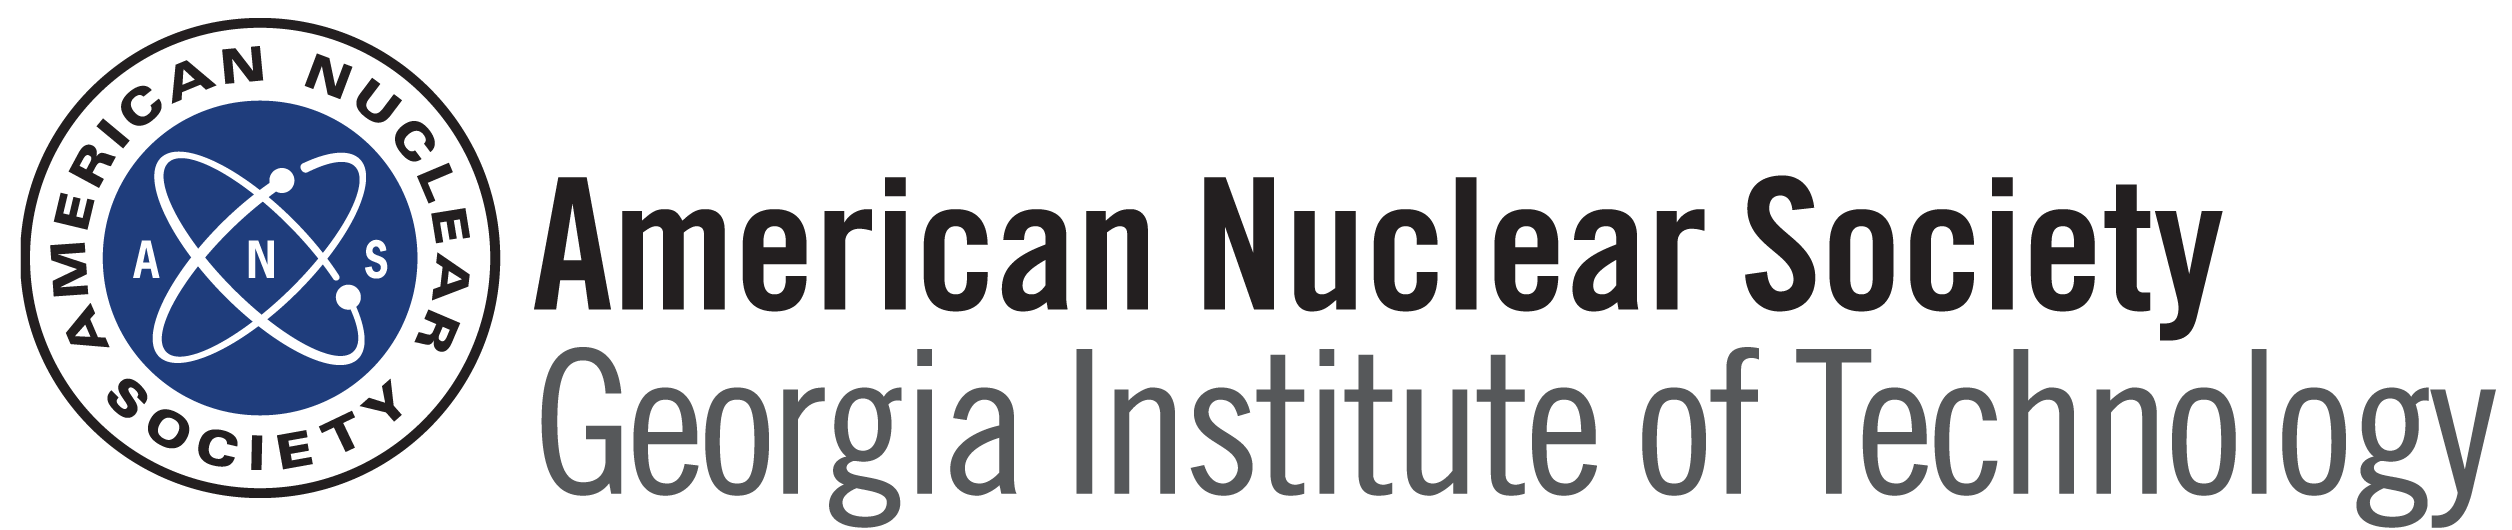 GT American Nuclear Society